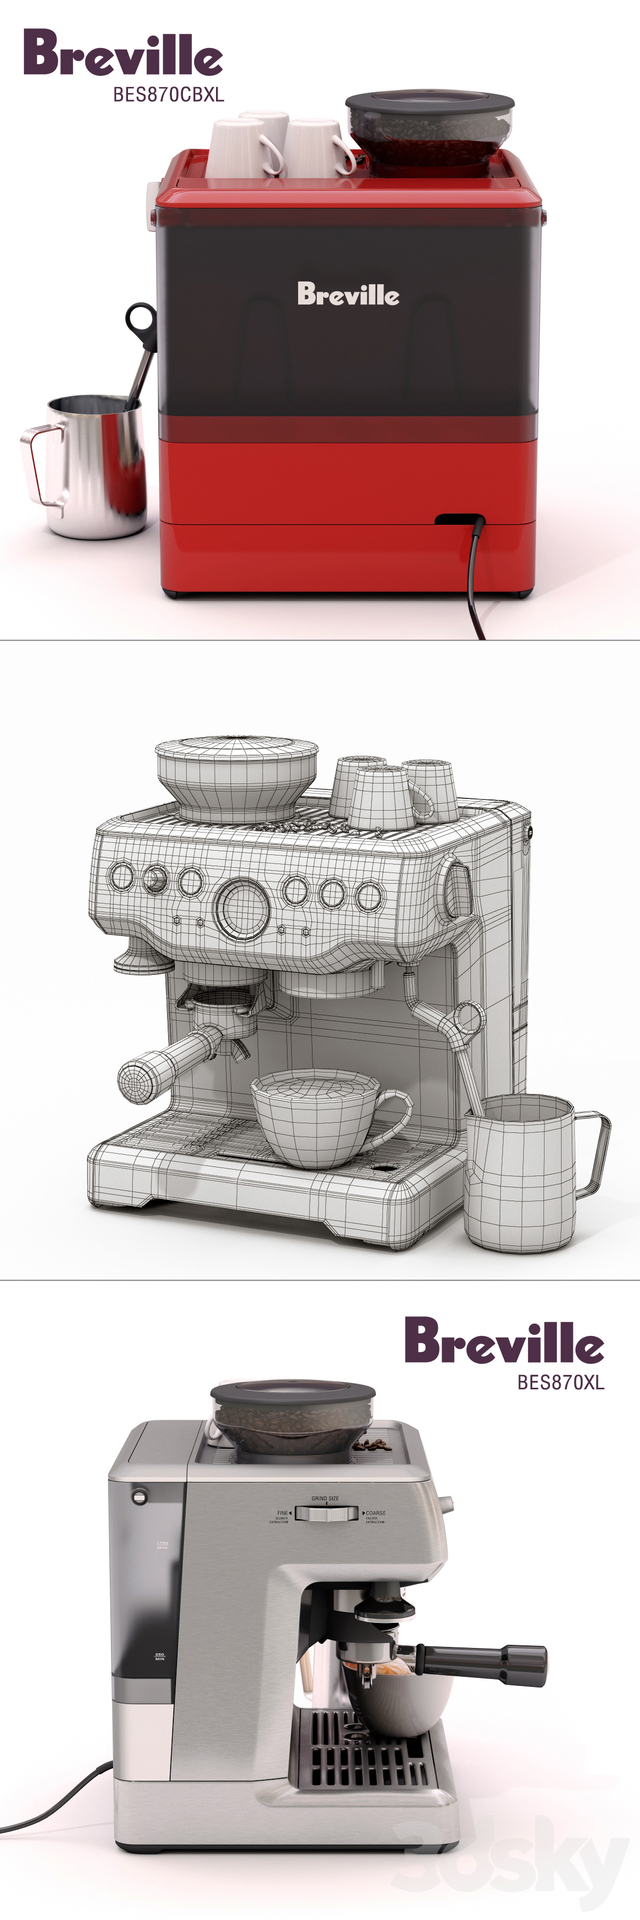 3d models: Kitchen appliance - Breville Barista Express